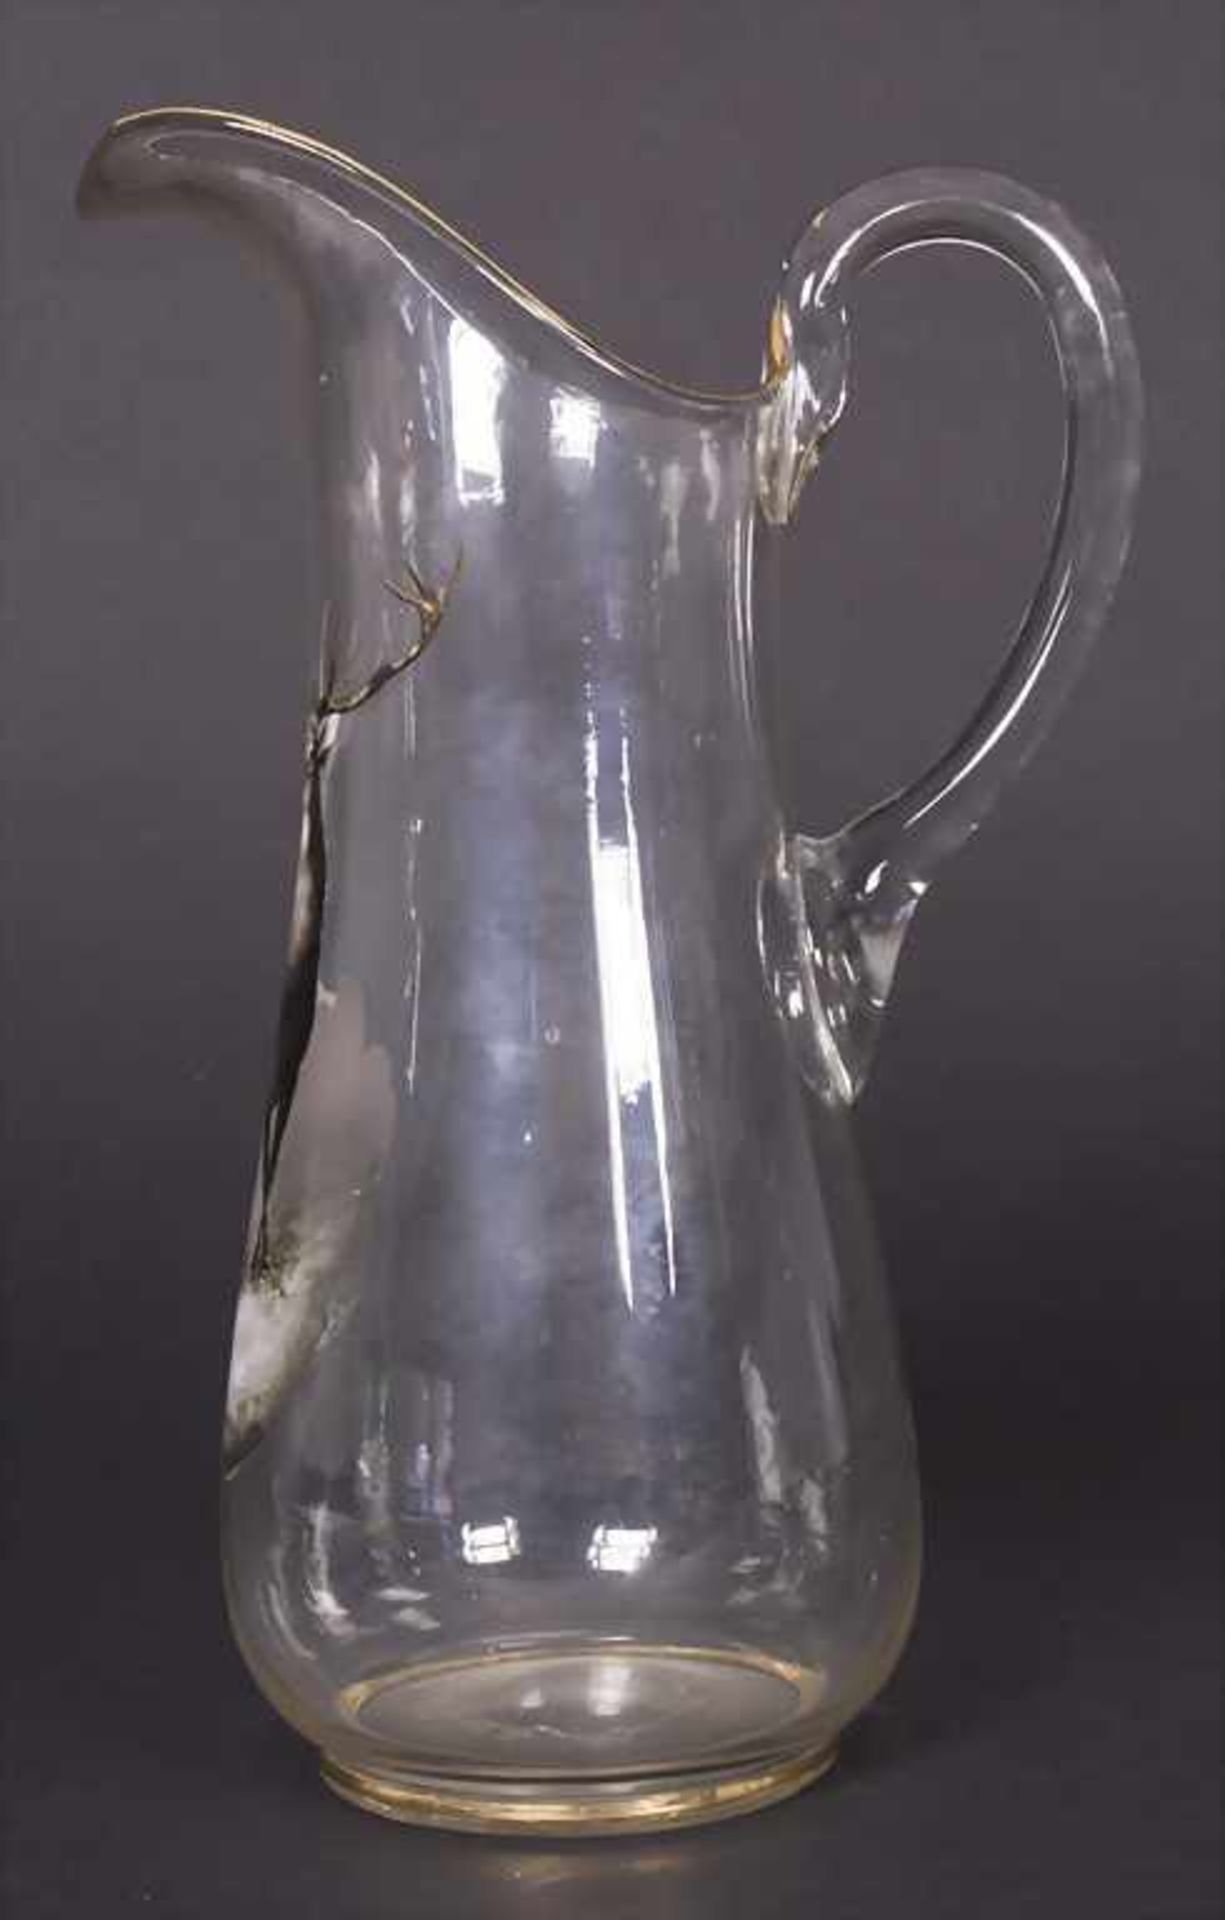 Saftkrug und 6 Gläser mit Hirschmotiven / A decanter and 6 glasses with deer decor, um 1900 - Image 4 of 6